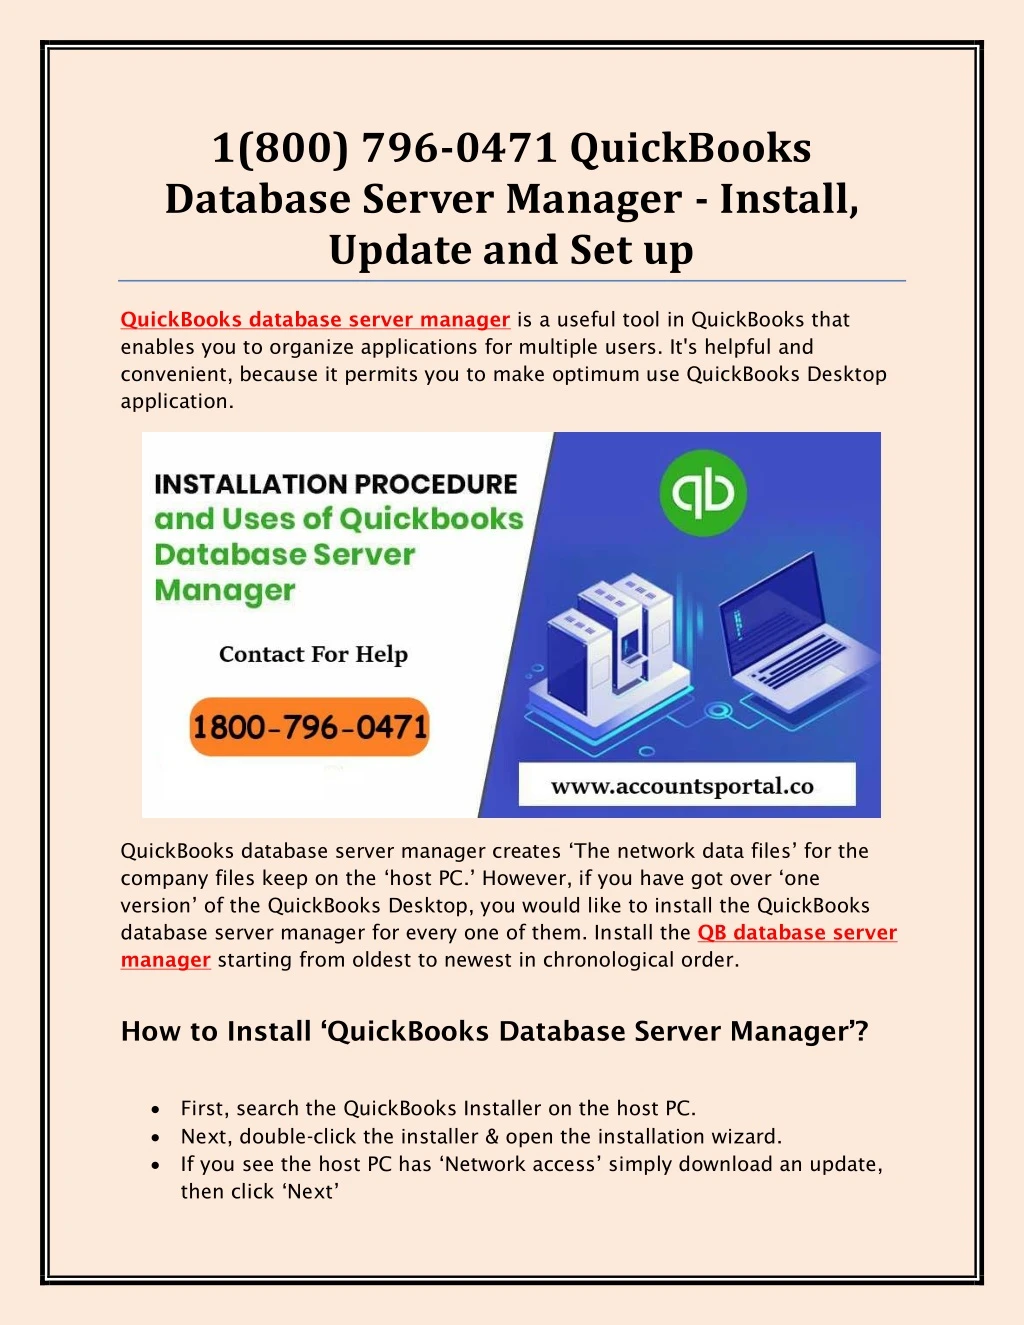 1 800 796 0471 quickbooks database server manager